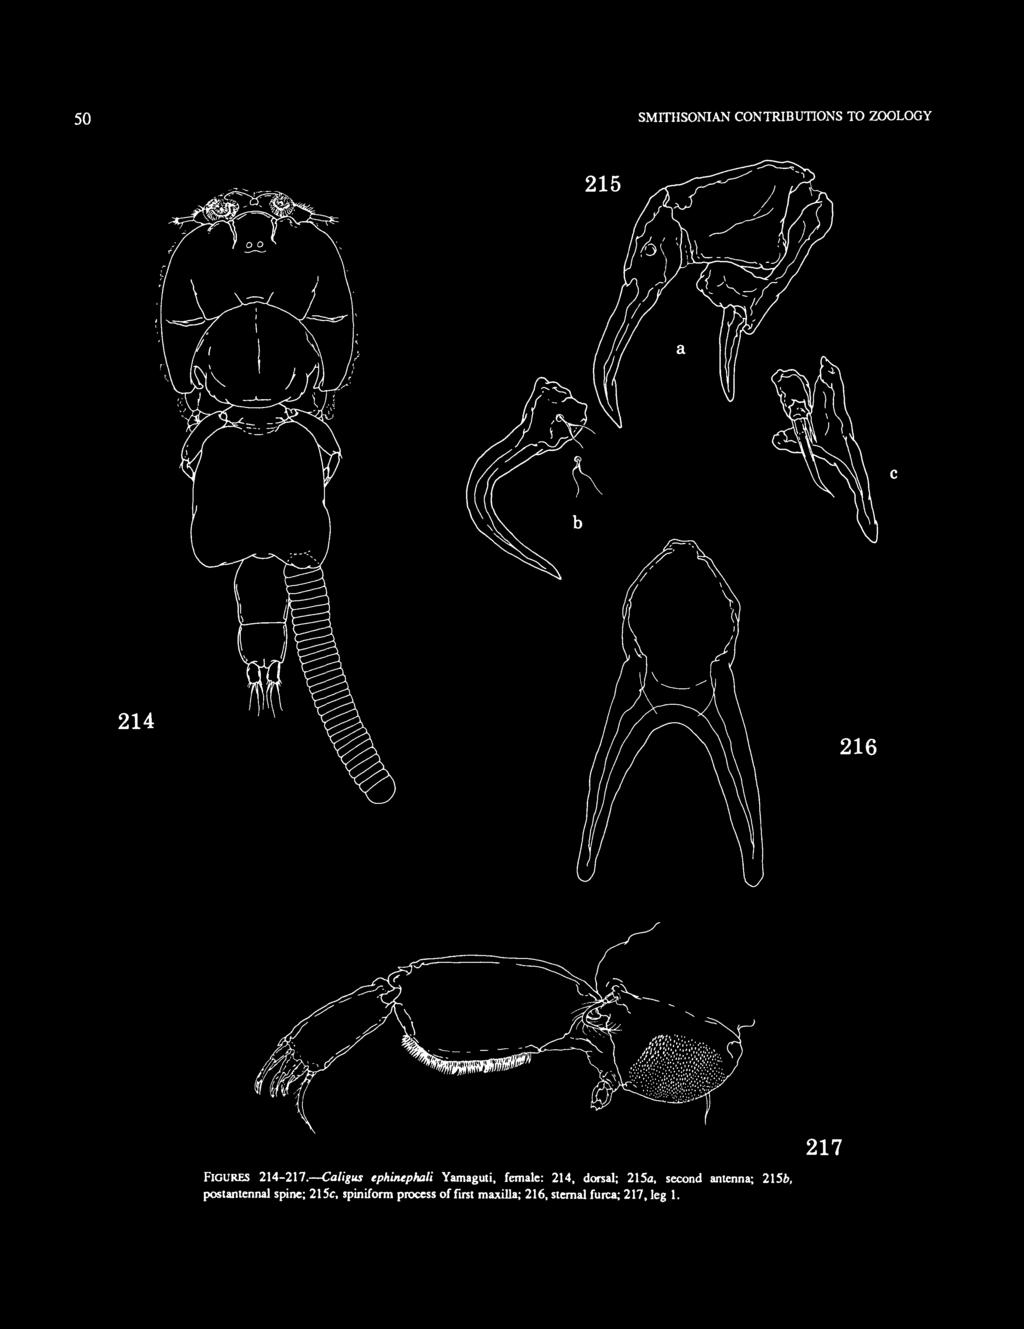 Caligus ephiruphali Yamaguti, female: 214, dorsal; 215a,